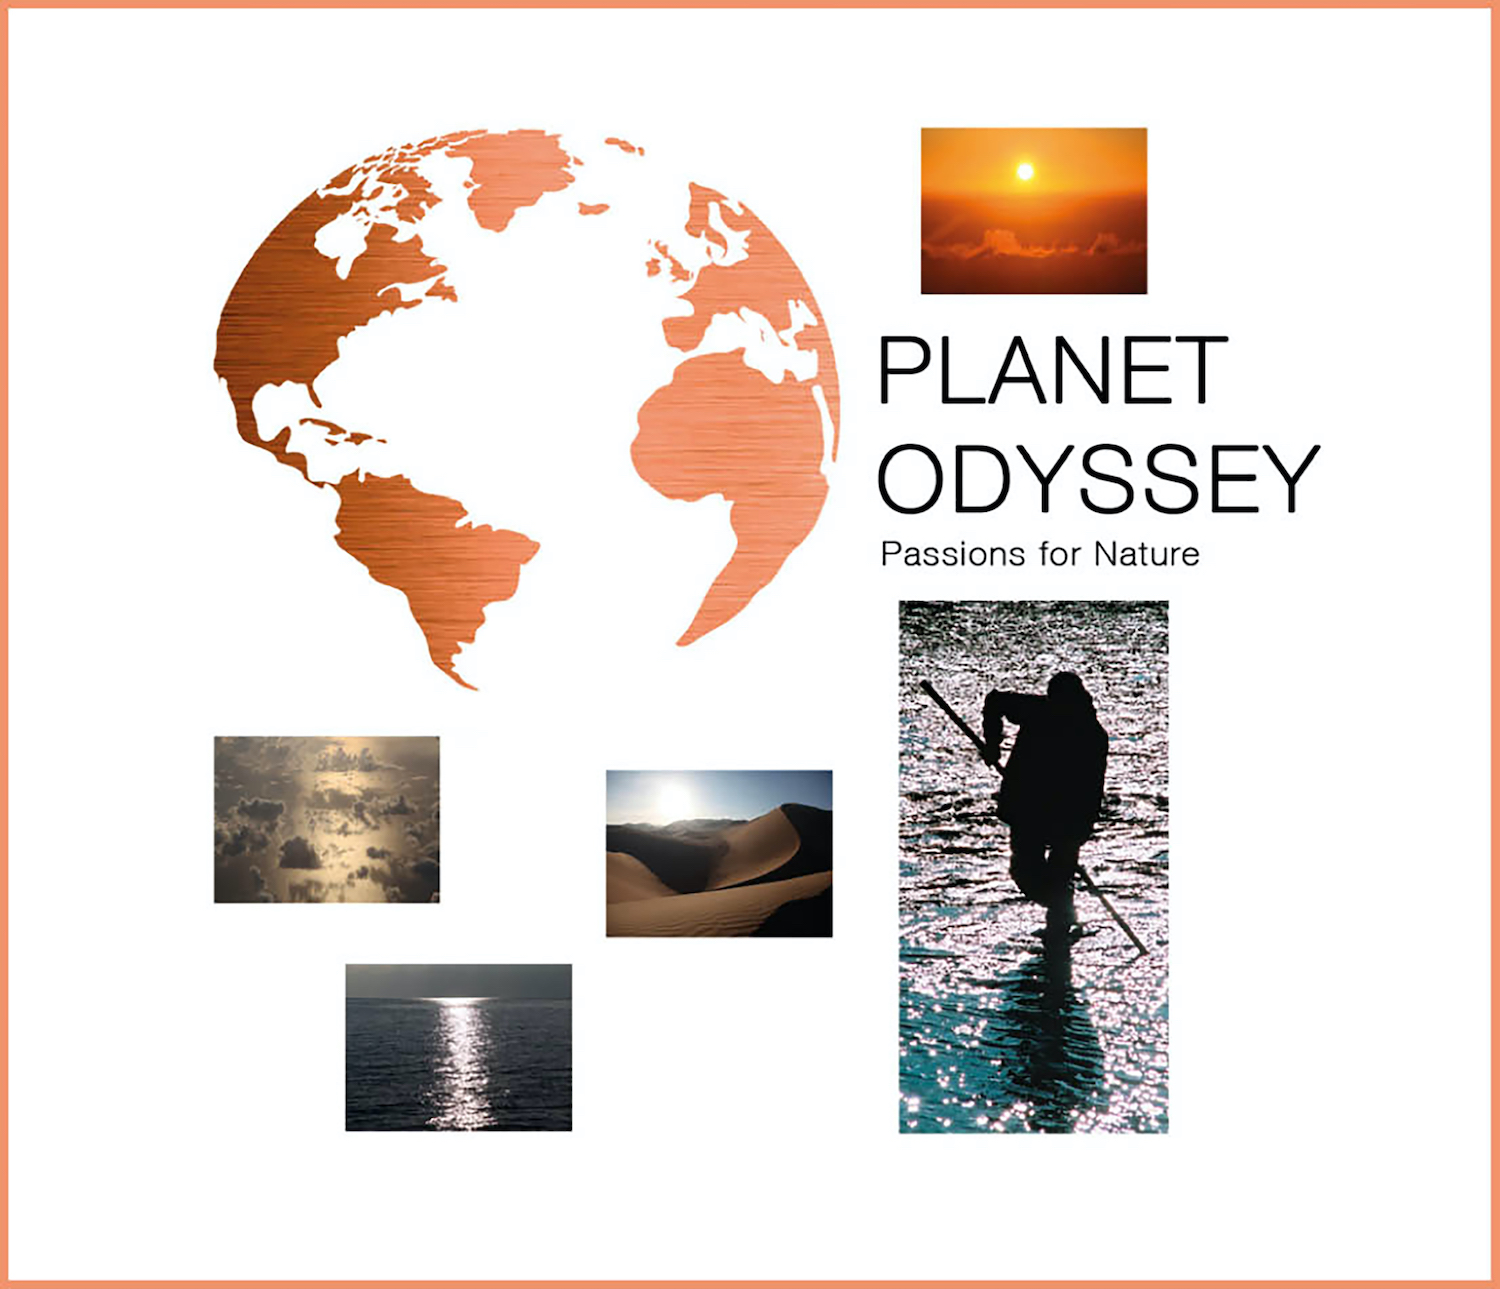 Logo Planet Odyssey